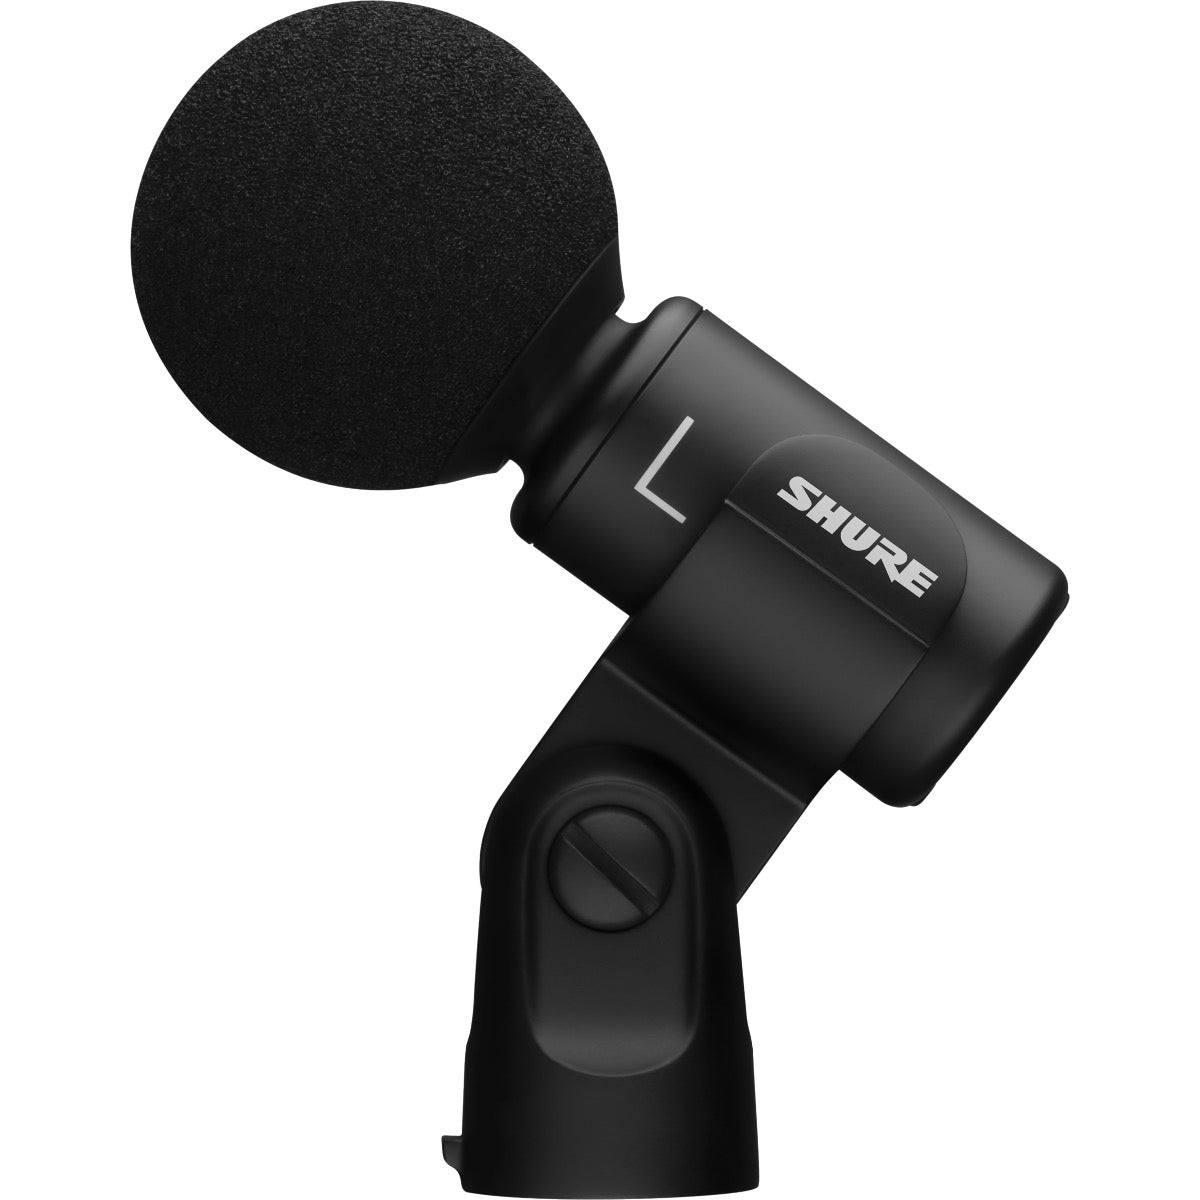 Shure MV88+ Stereo USB Condenser Microphone View 13